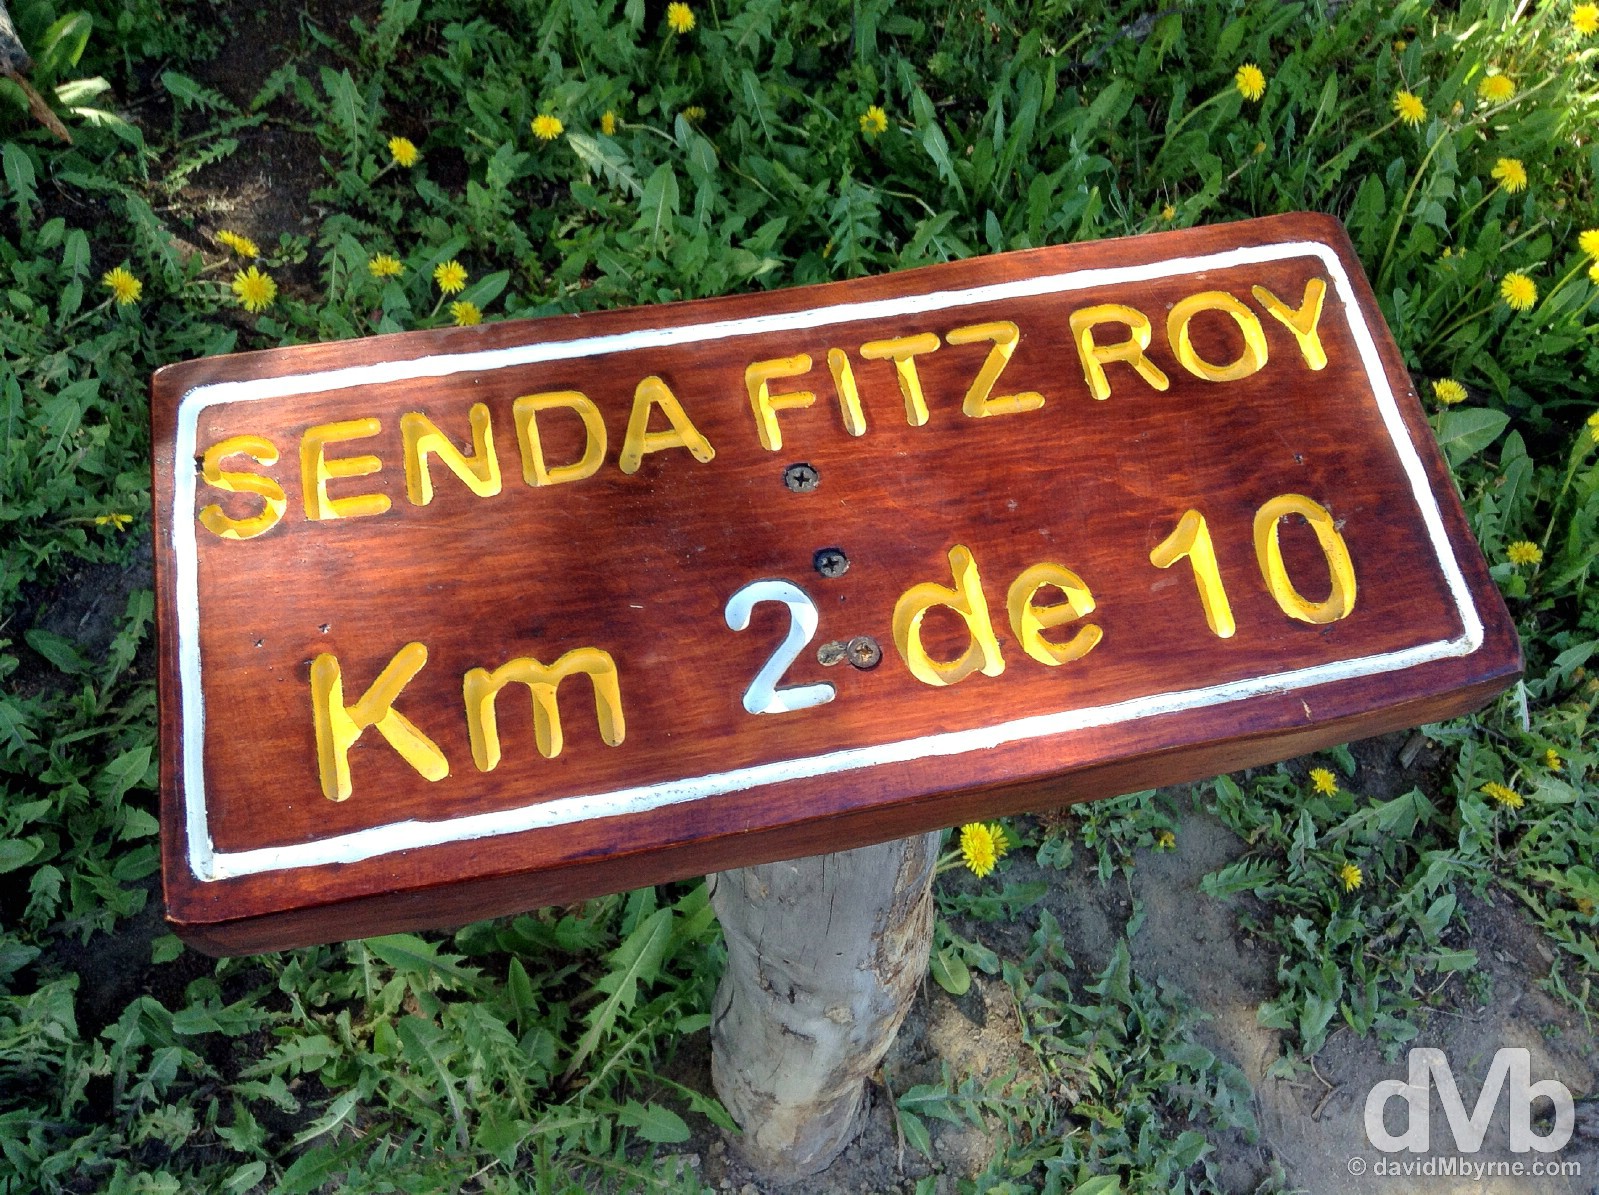 Kilometre markers on the Senda Fitz Roy (Fitz Roy Track) in the Fitz Roy sector of Parque Nacional Los Glaciares, southern Patagonia, Argentina. November 4, 2015.